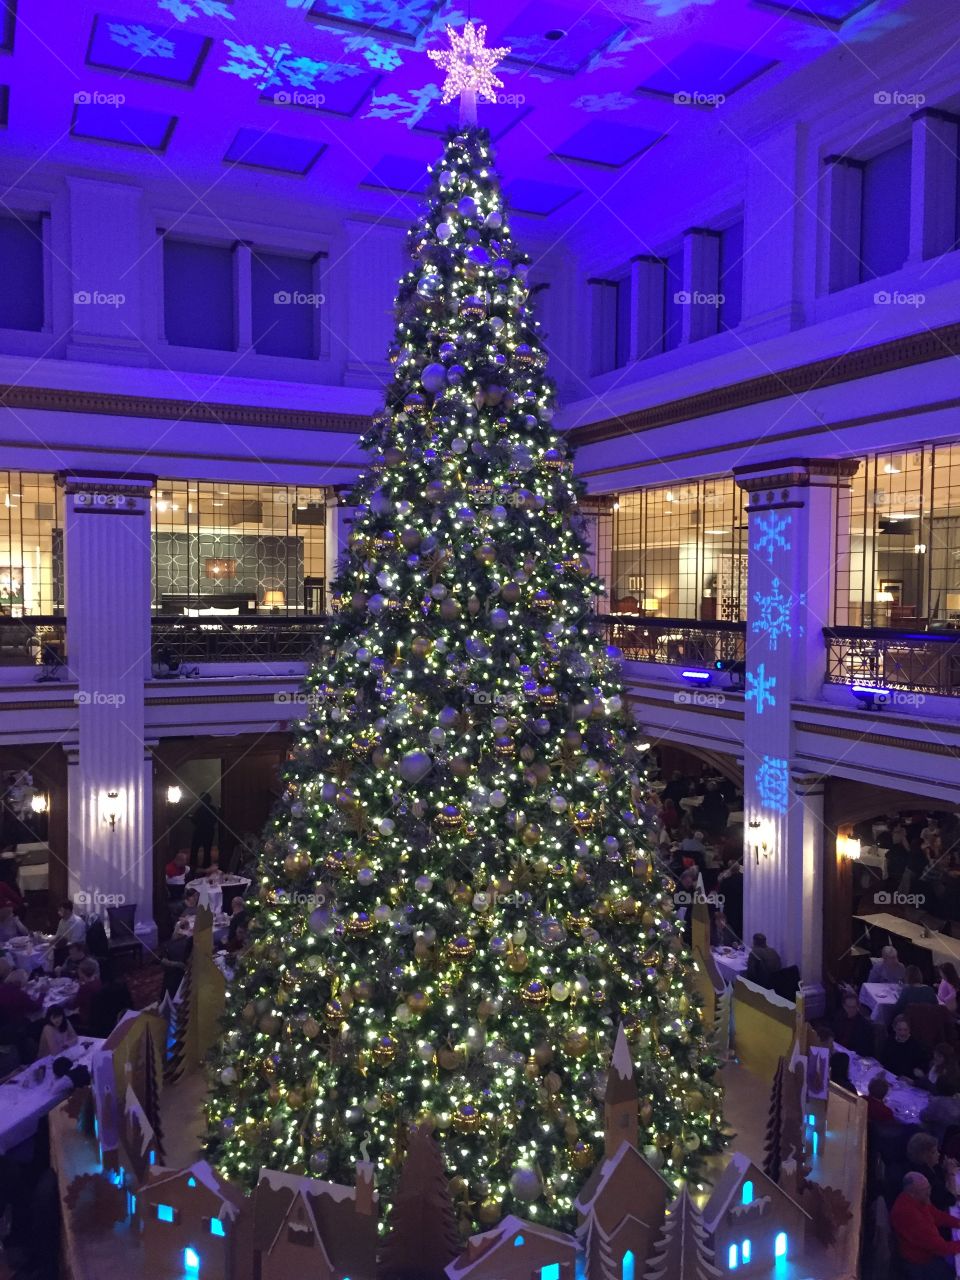 Large indoor Christmas tree. 